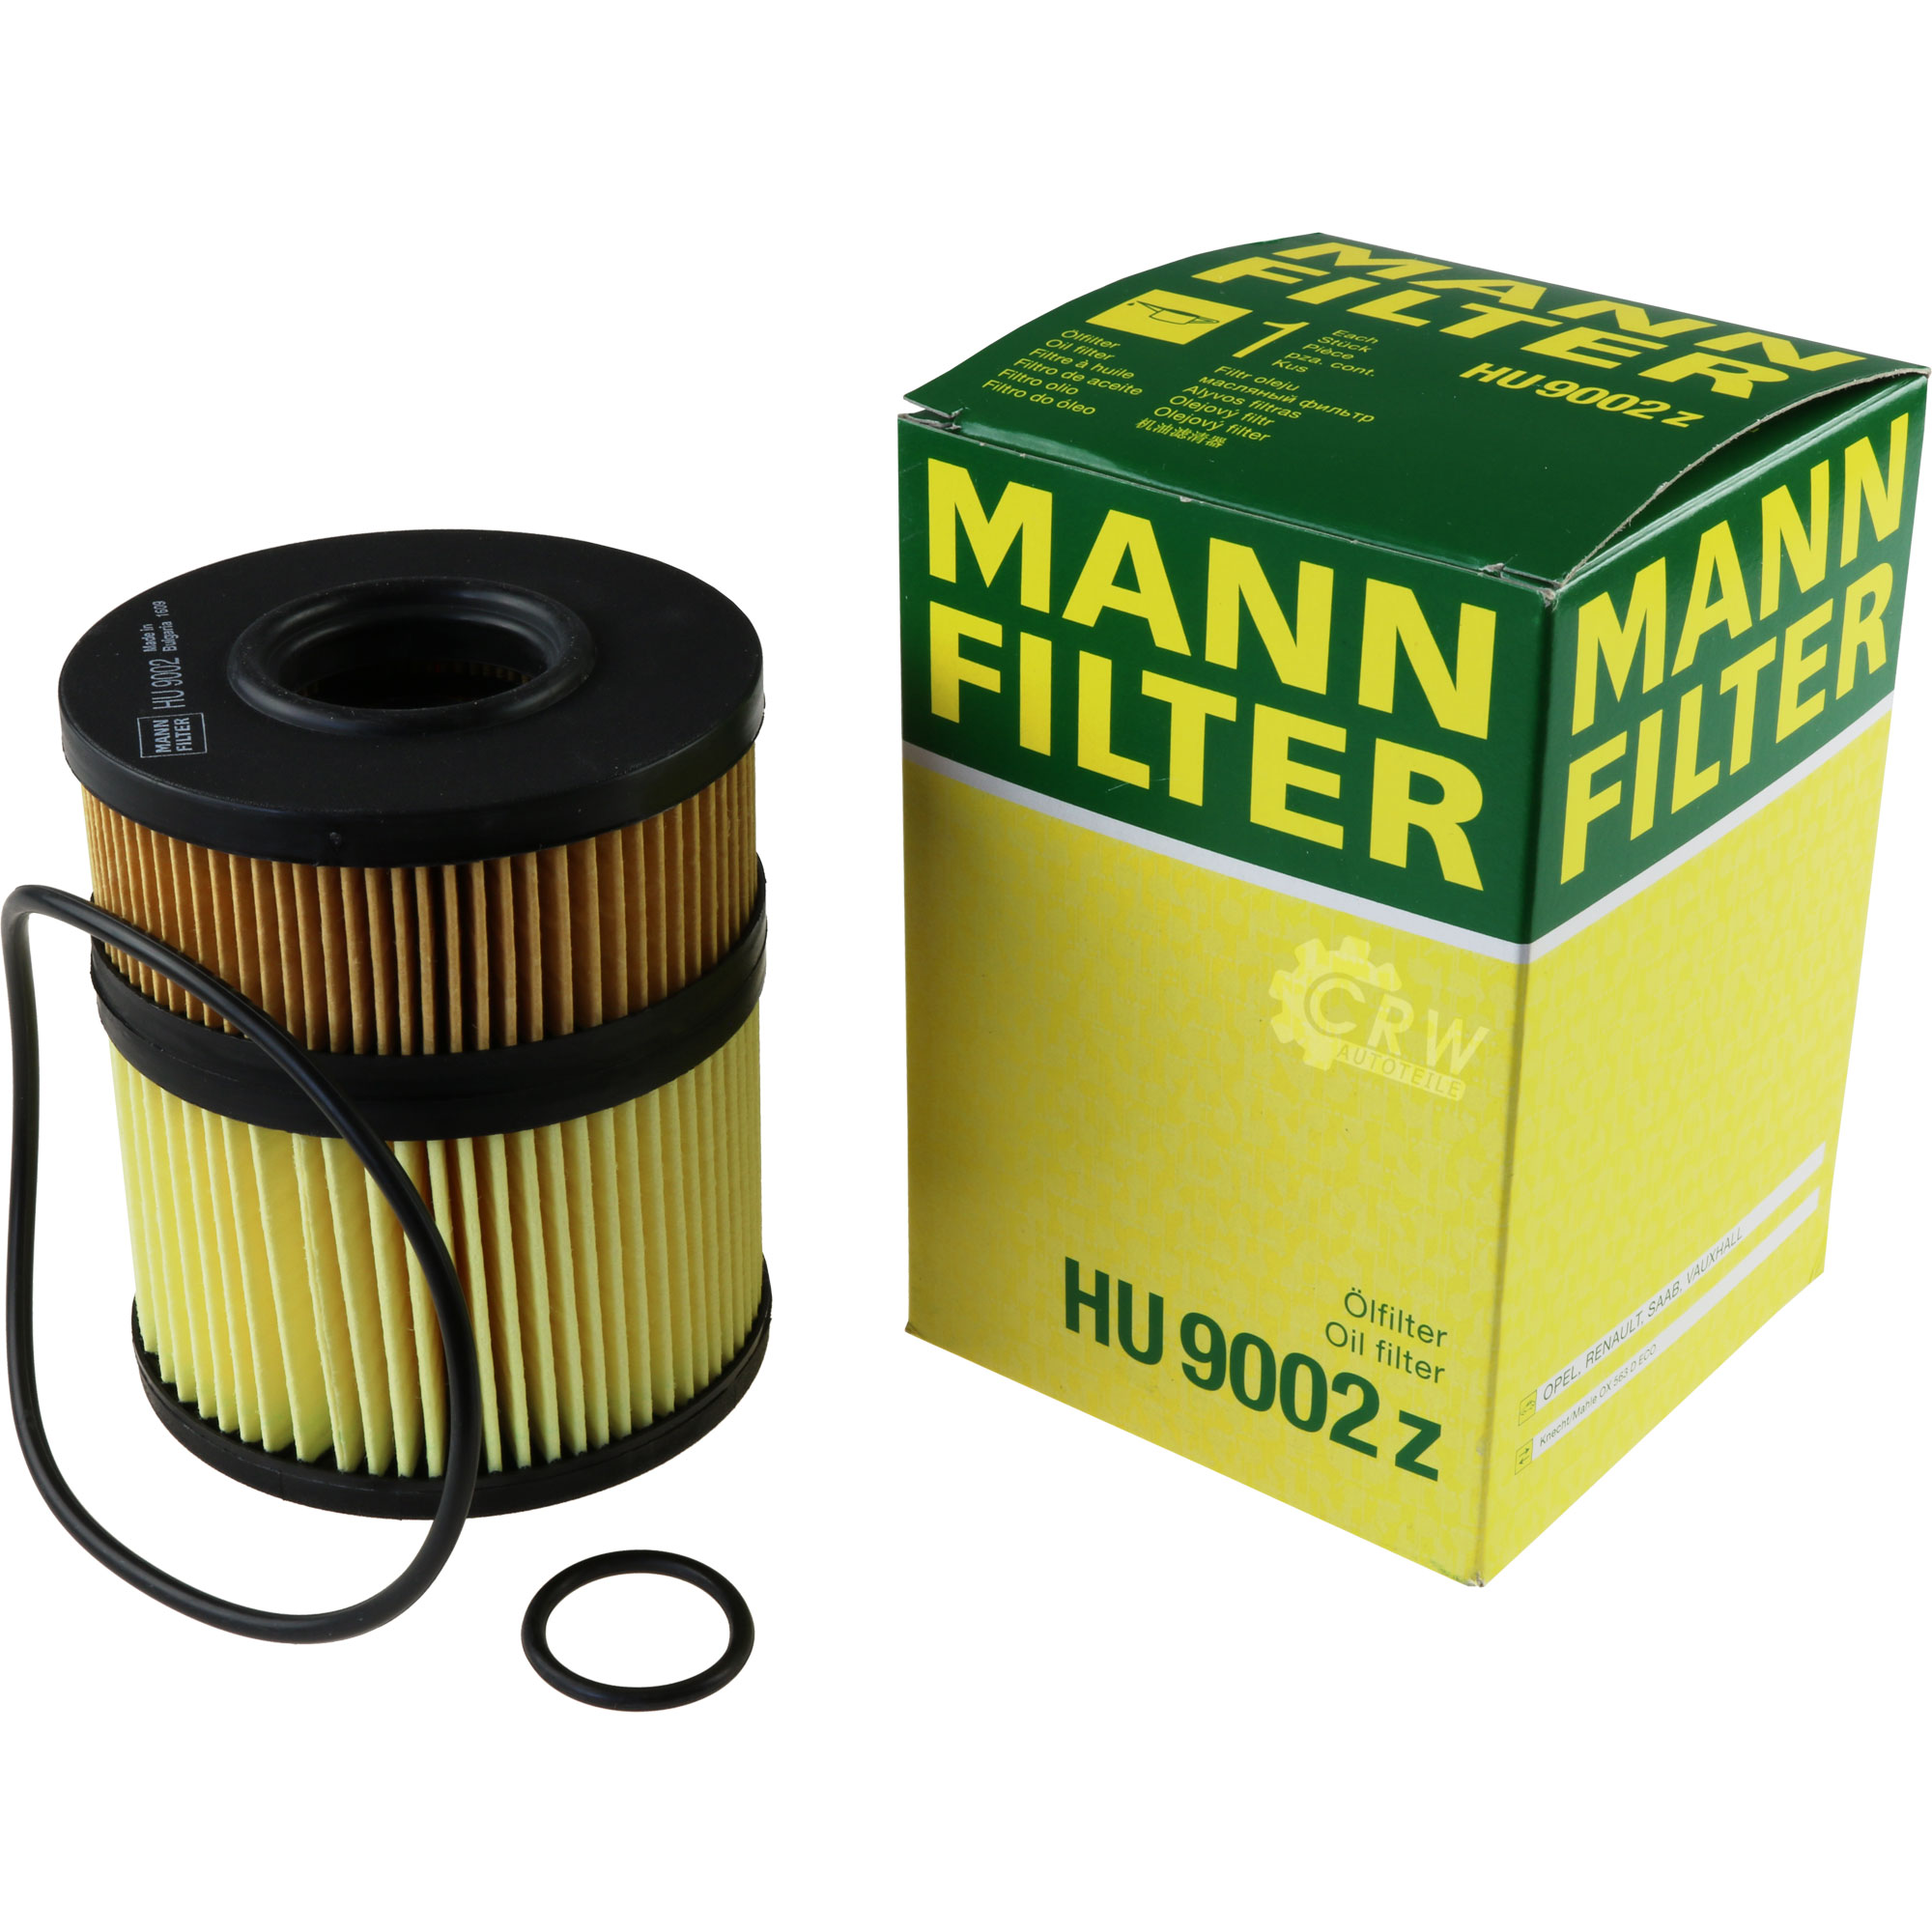 MANN-FILTER Ölfilter HU 9002 z Oil Filter